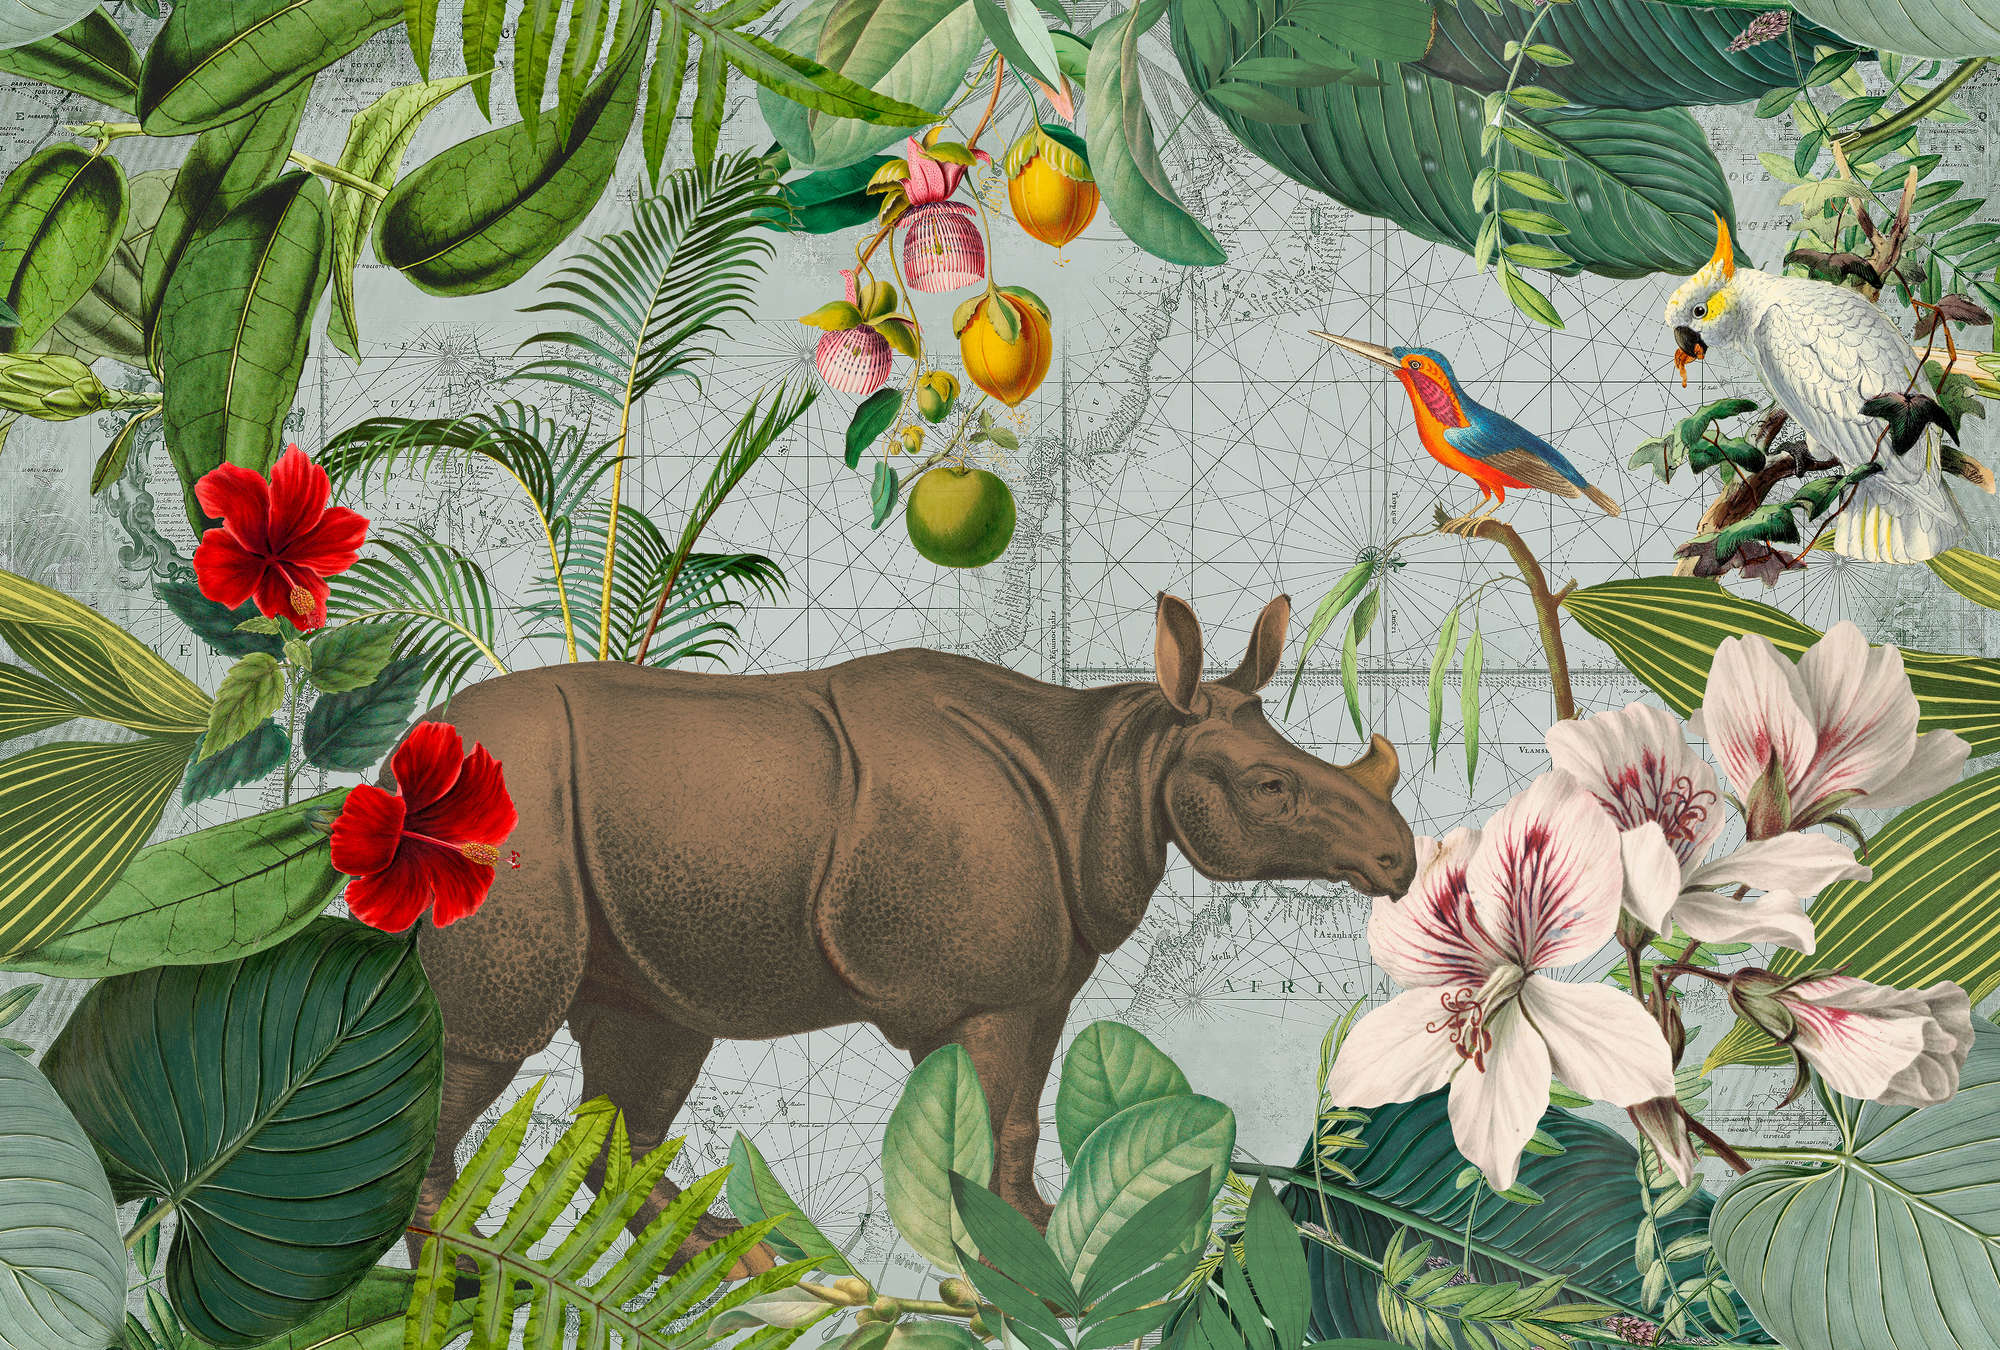             Photo wallpaper rhino with jungle collage in retro style
        